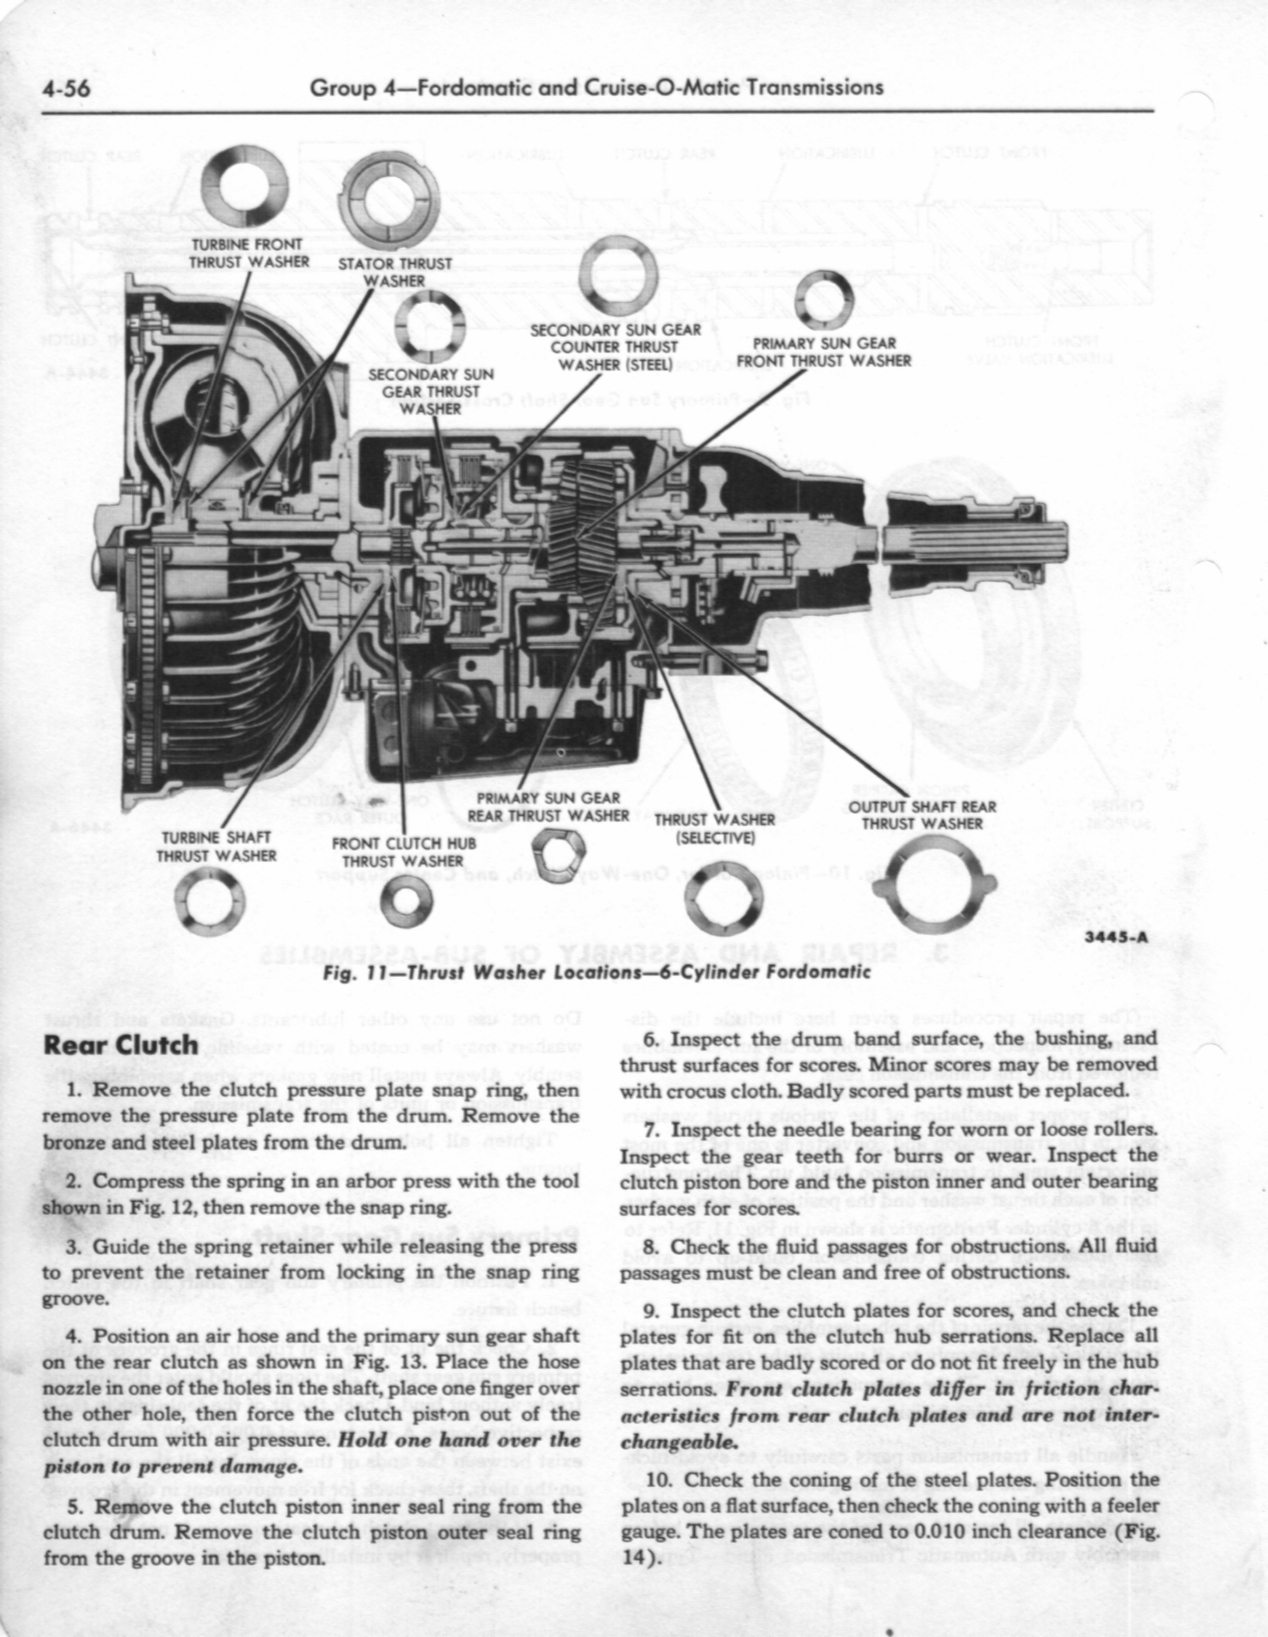 1958 Ford cruise-o-matic transmission #9